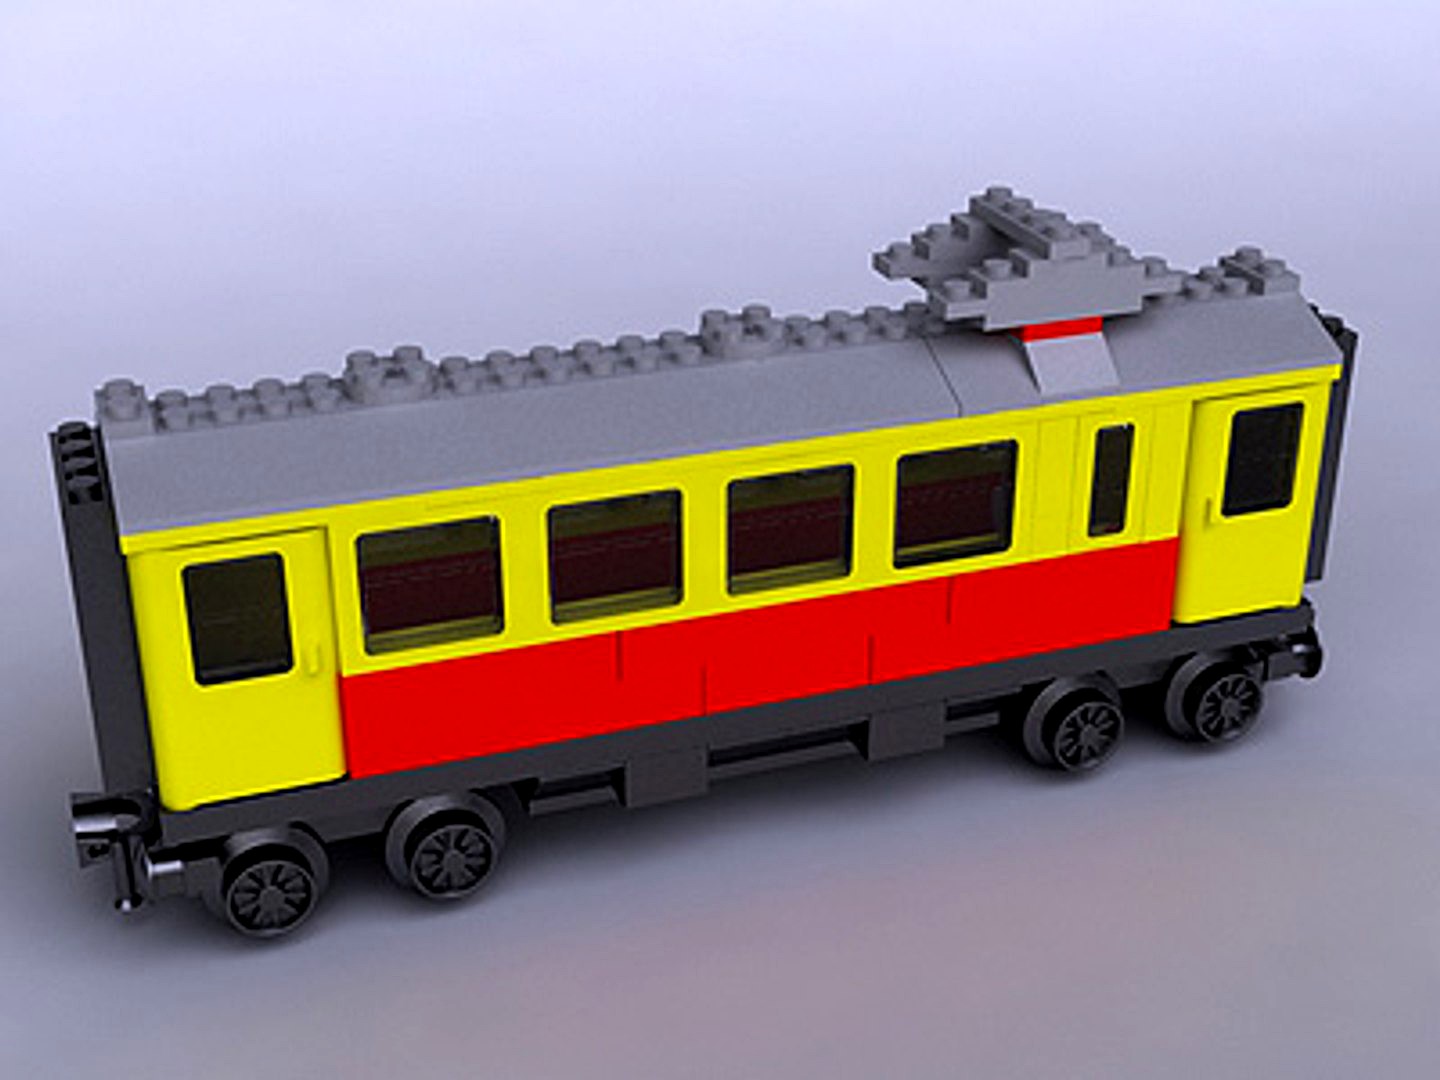 LEGO DEUTSCHE BAHN 2ND CLASSEND CAB CAR WITH CATERNARY